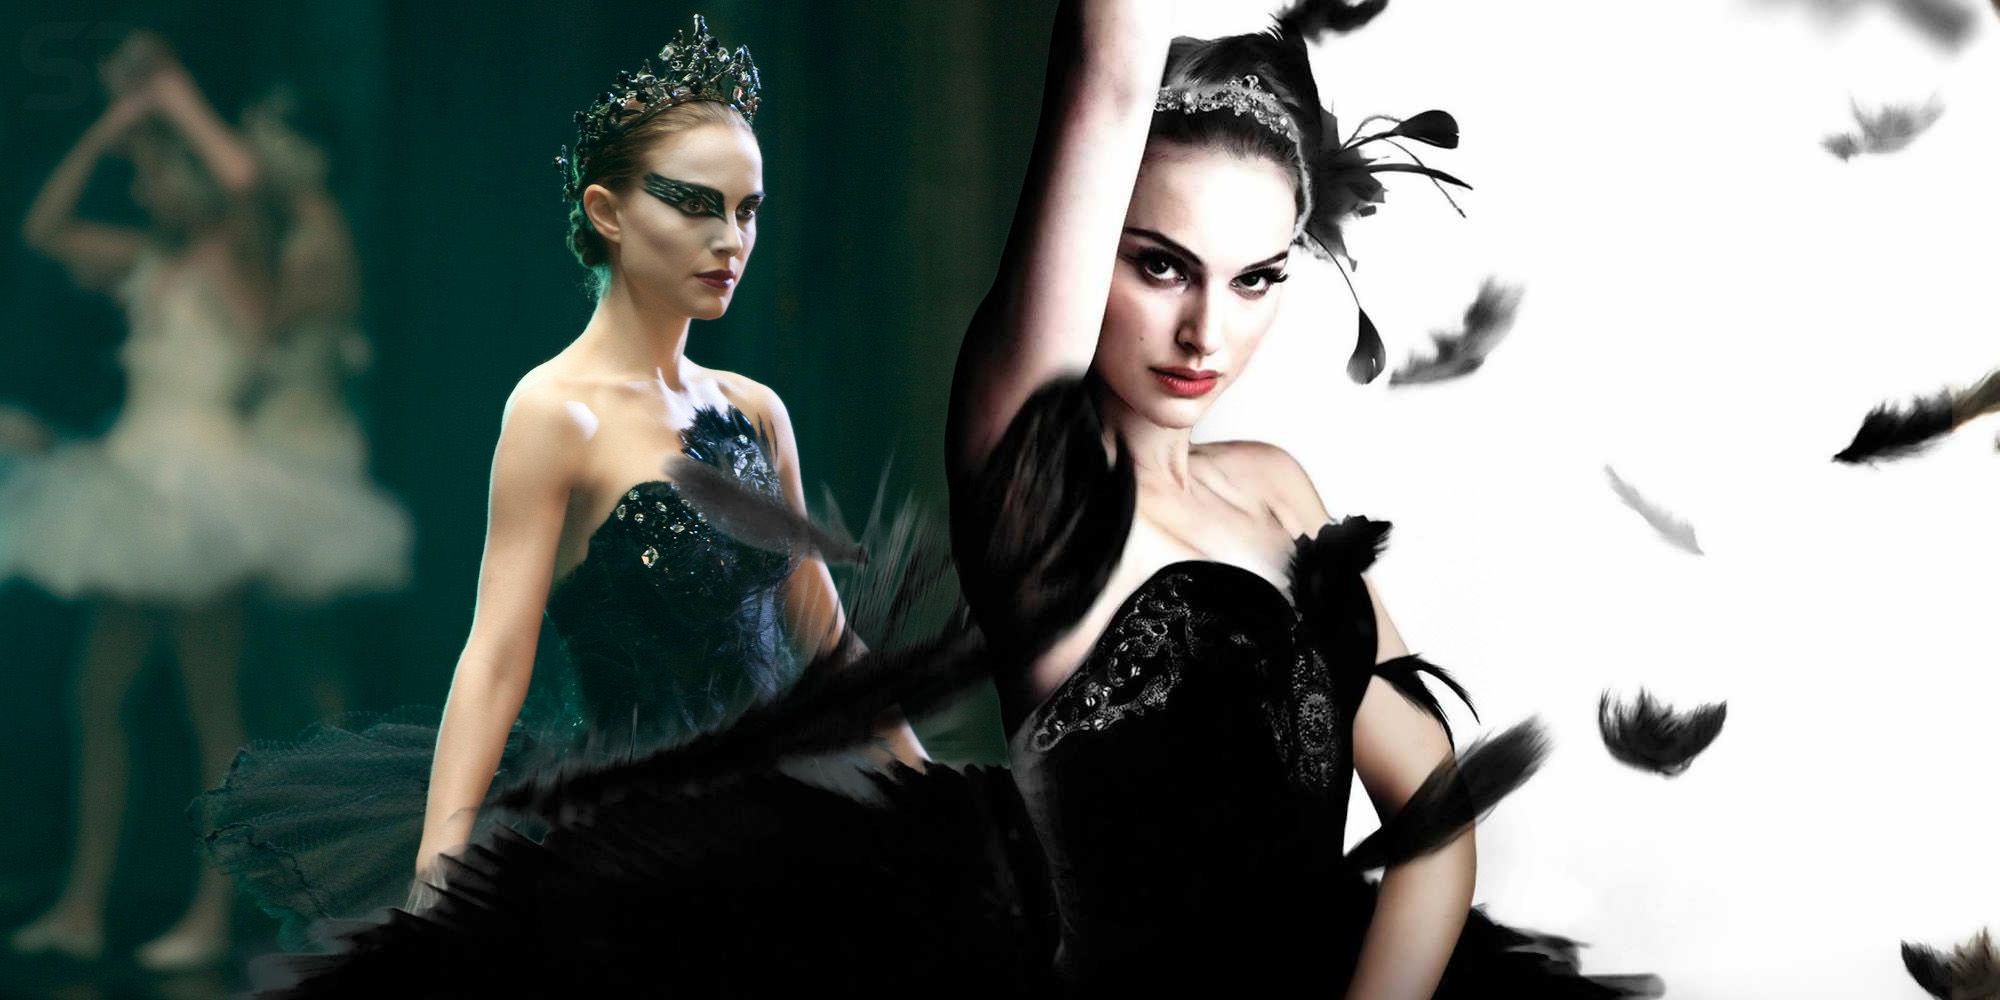 Black Swan: Does Nina Die After The Performance?